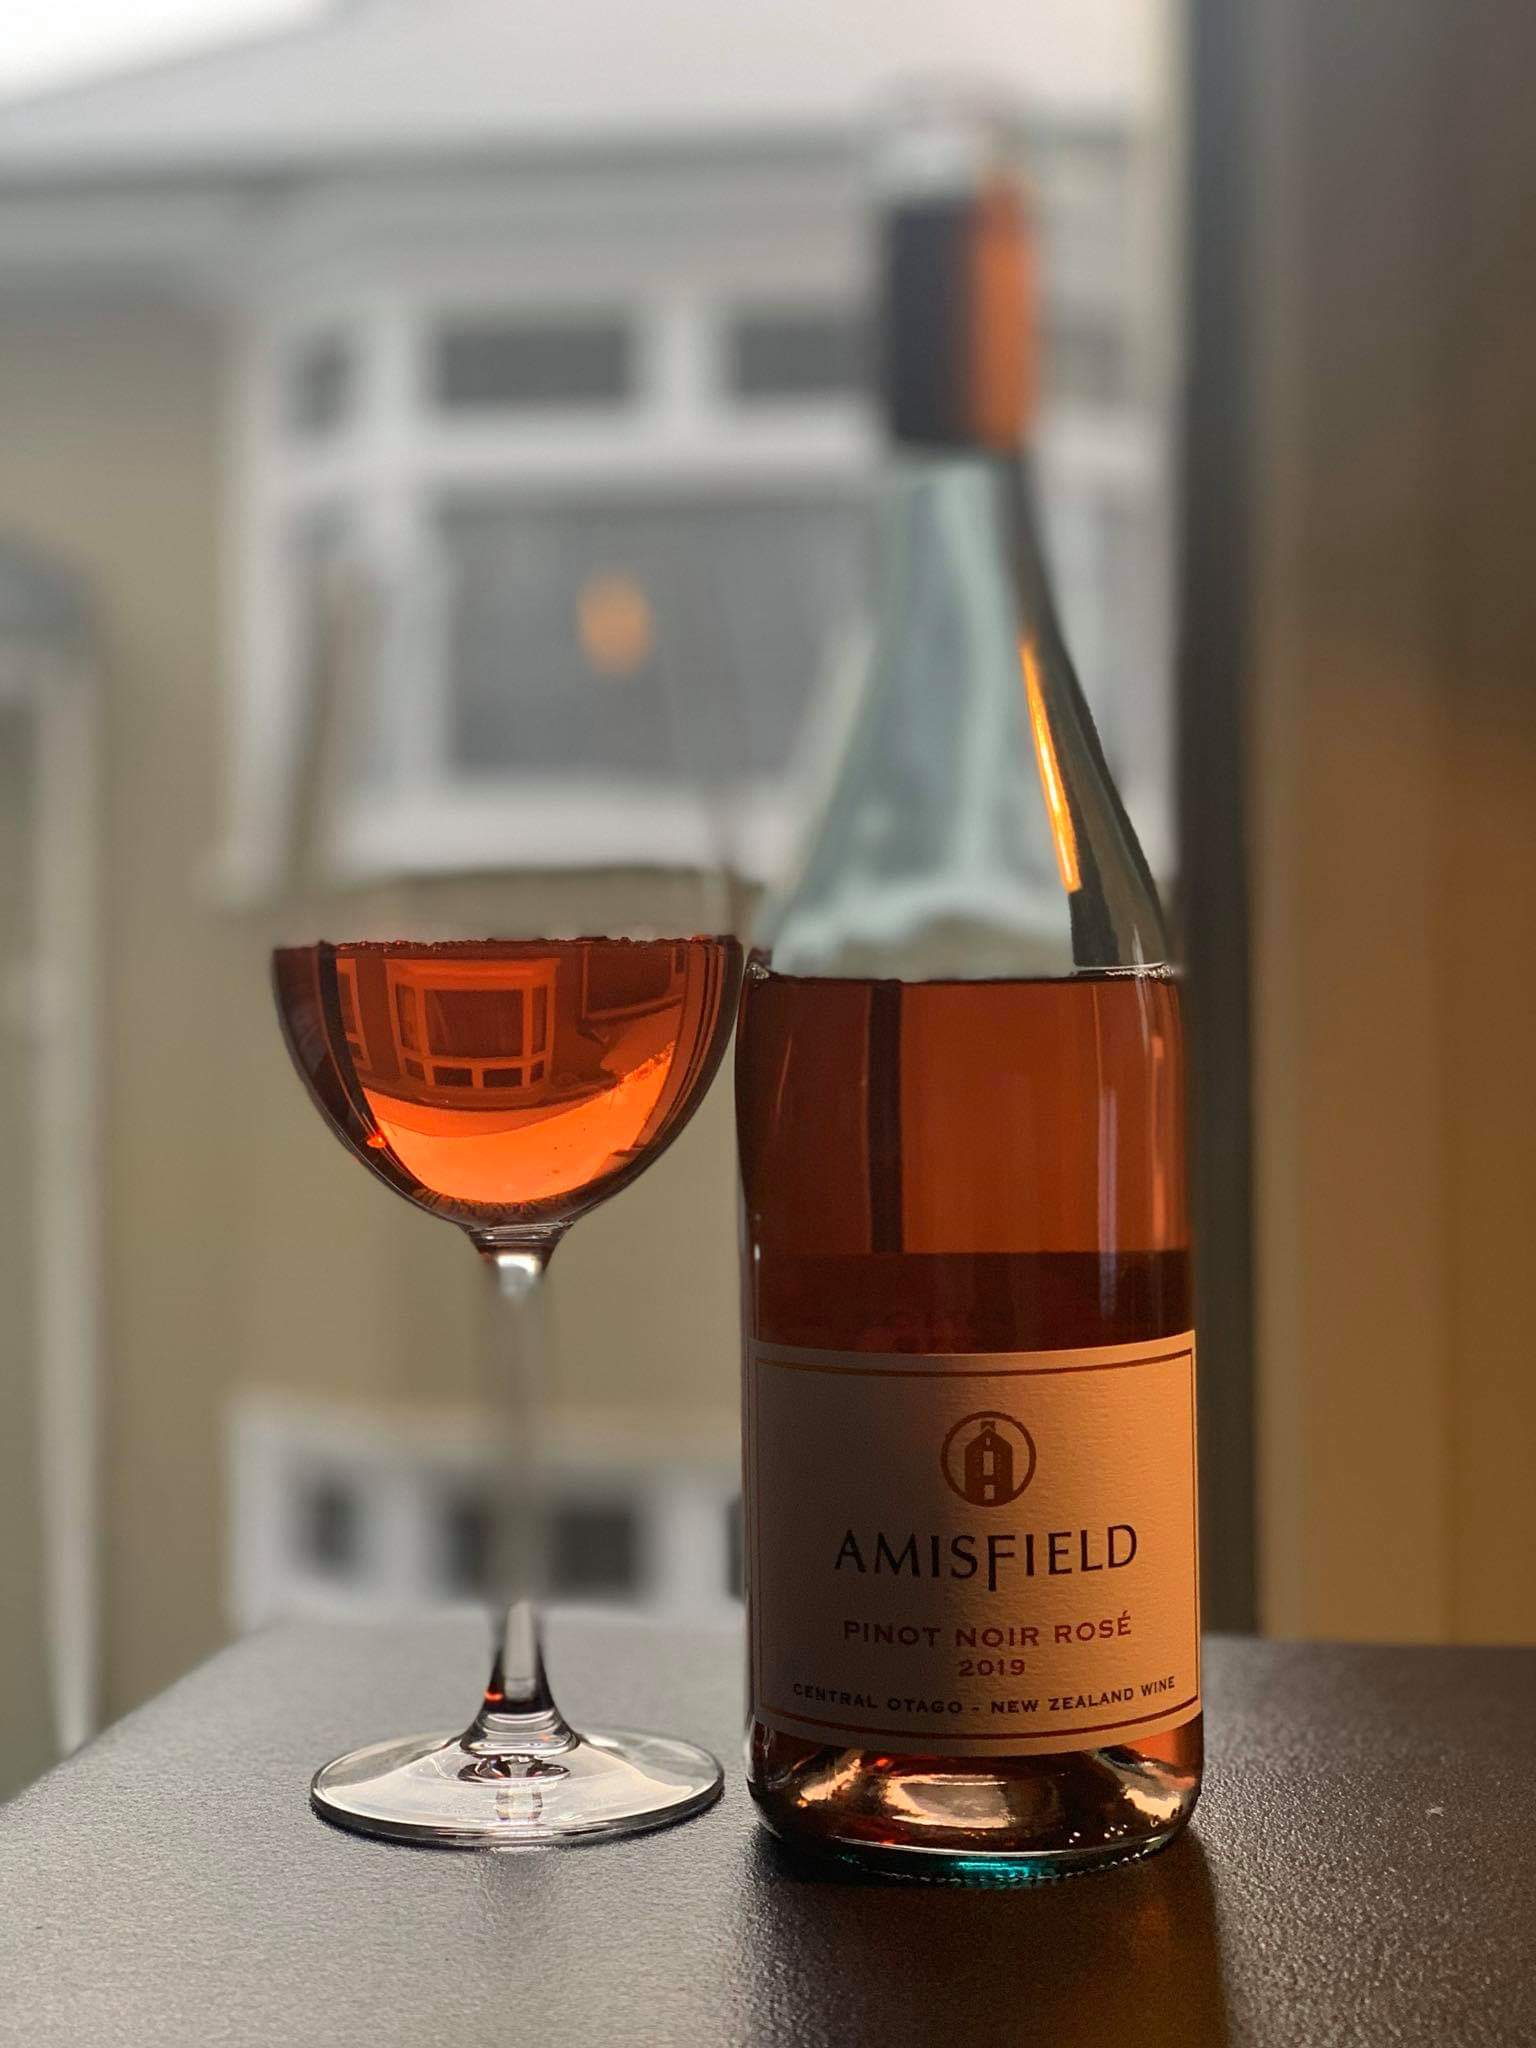 Amisfield Pinot Noir Rosé 2019 (3.5/5 ⭐)